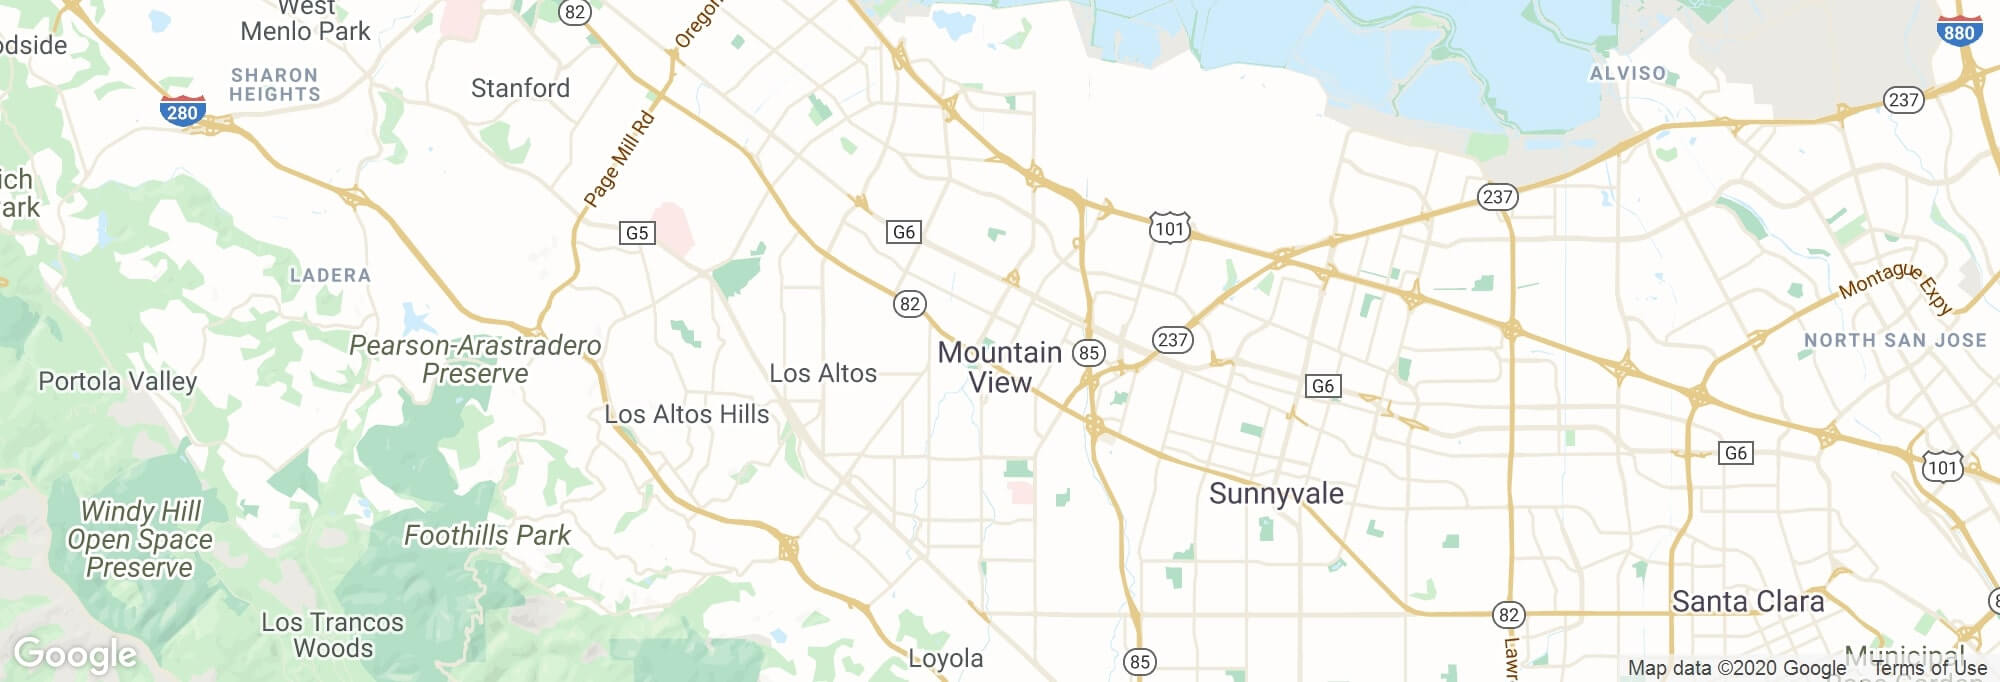 Mountain View city map